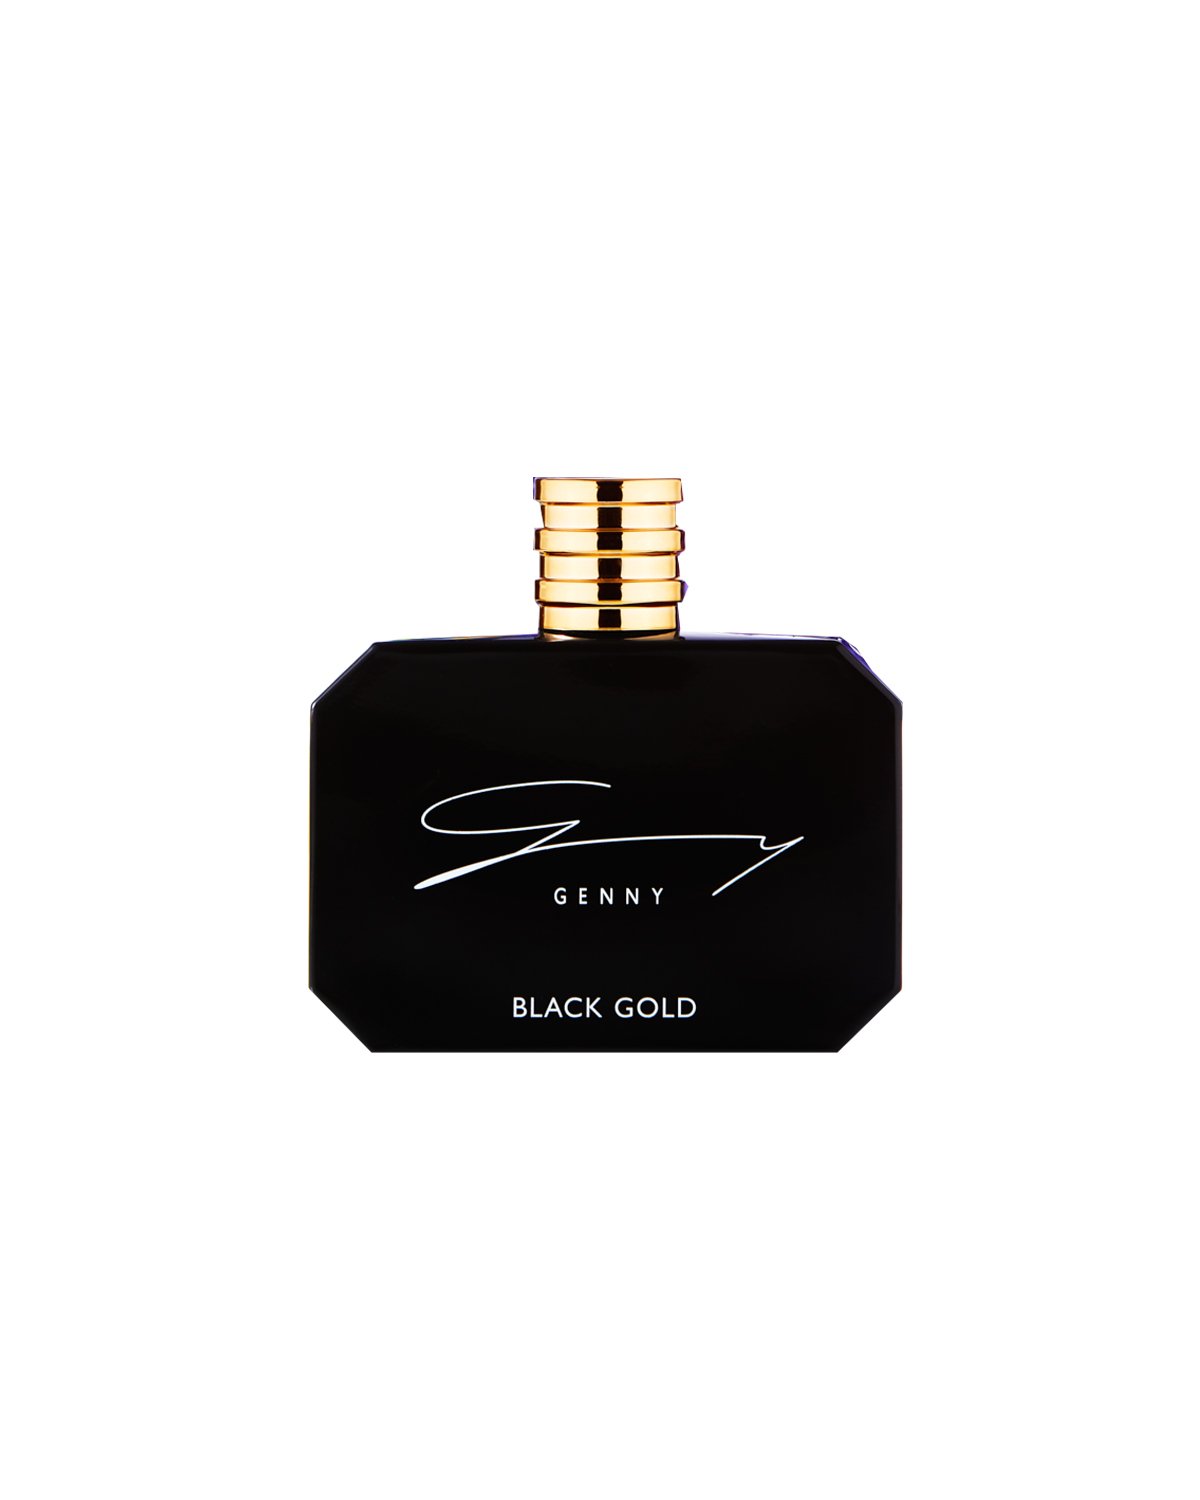 Perfume black gold by Genny